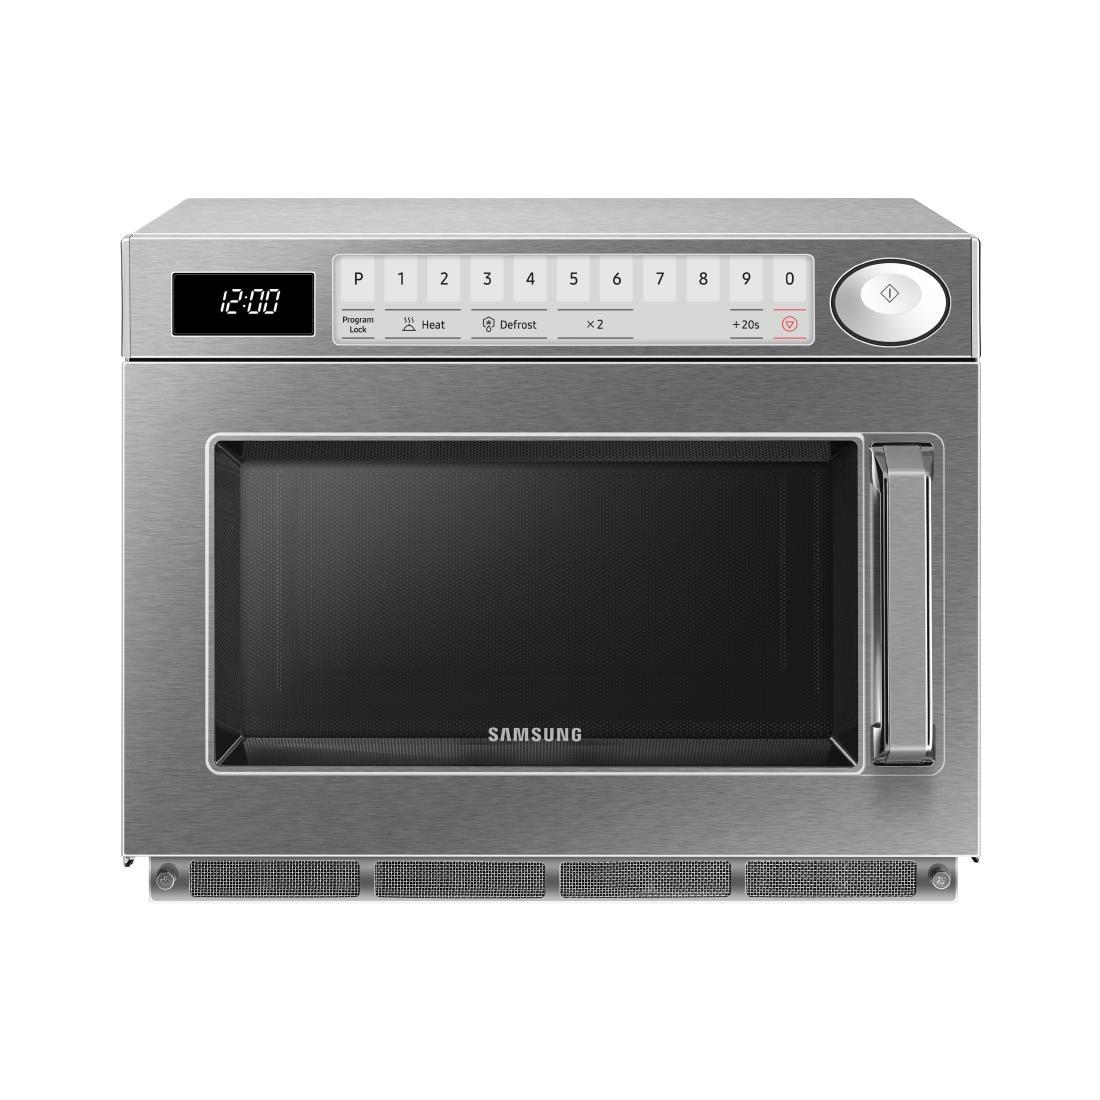 Samsung Commercial Microwave Digital 26Ltr 1500W - FS318  - 1